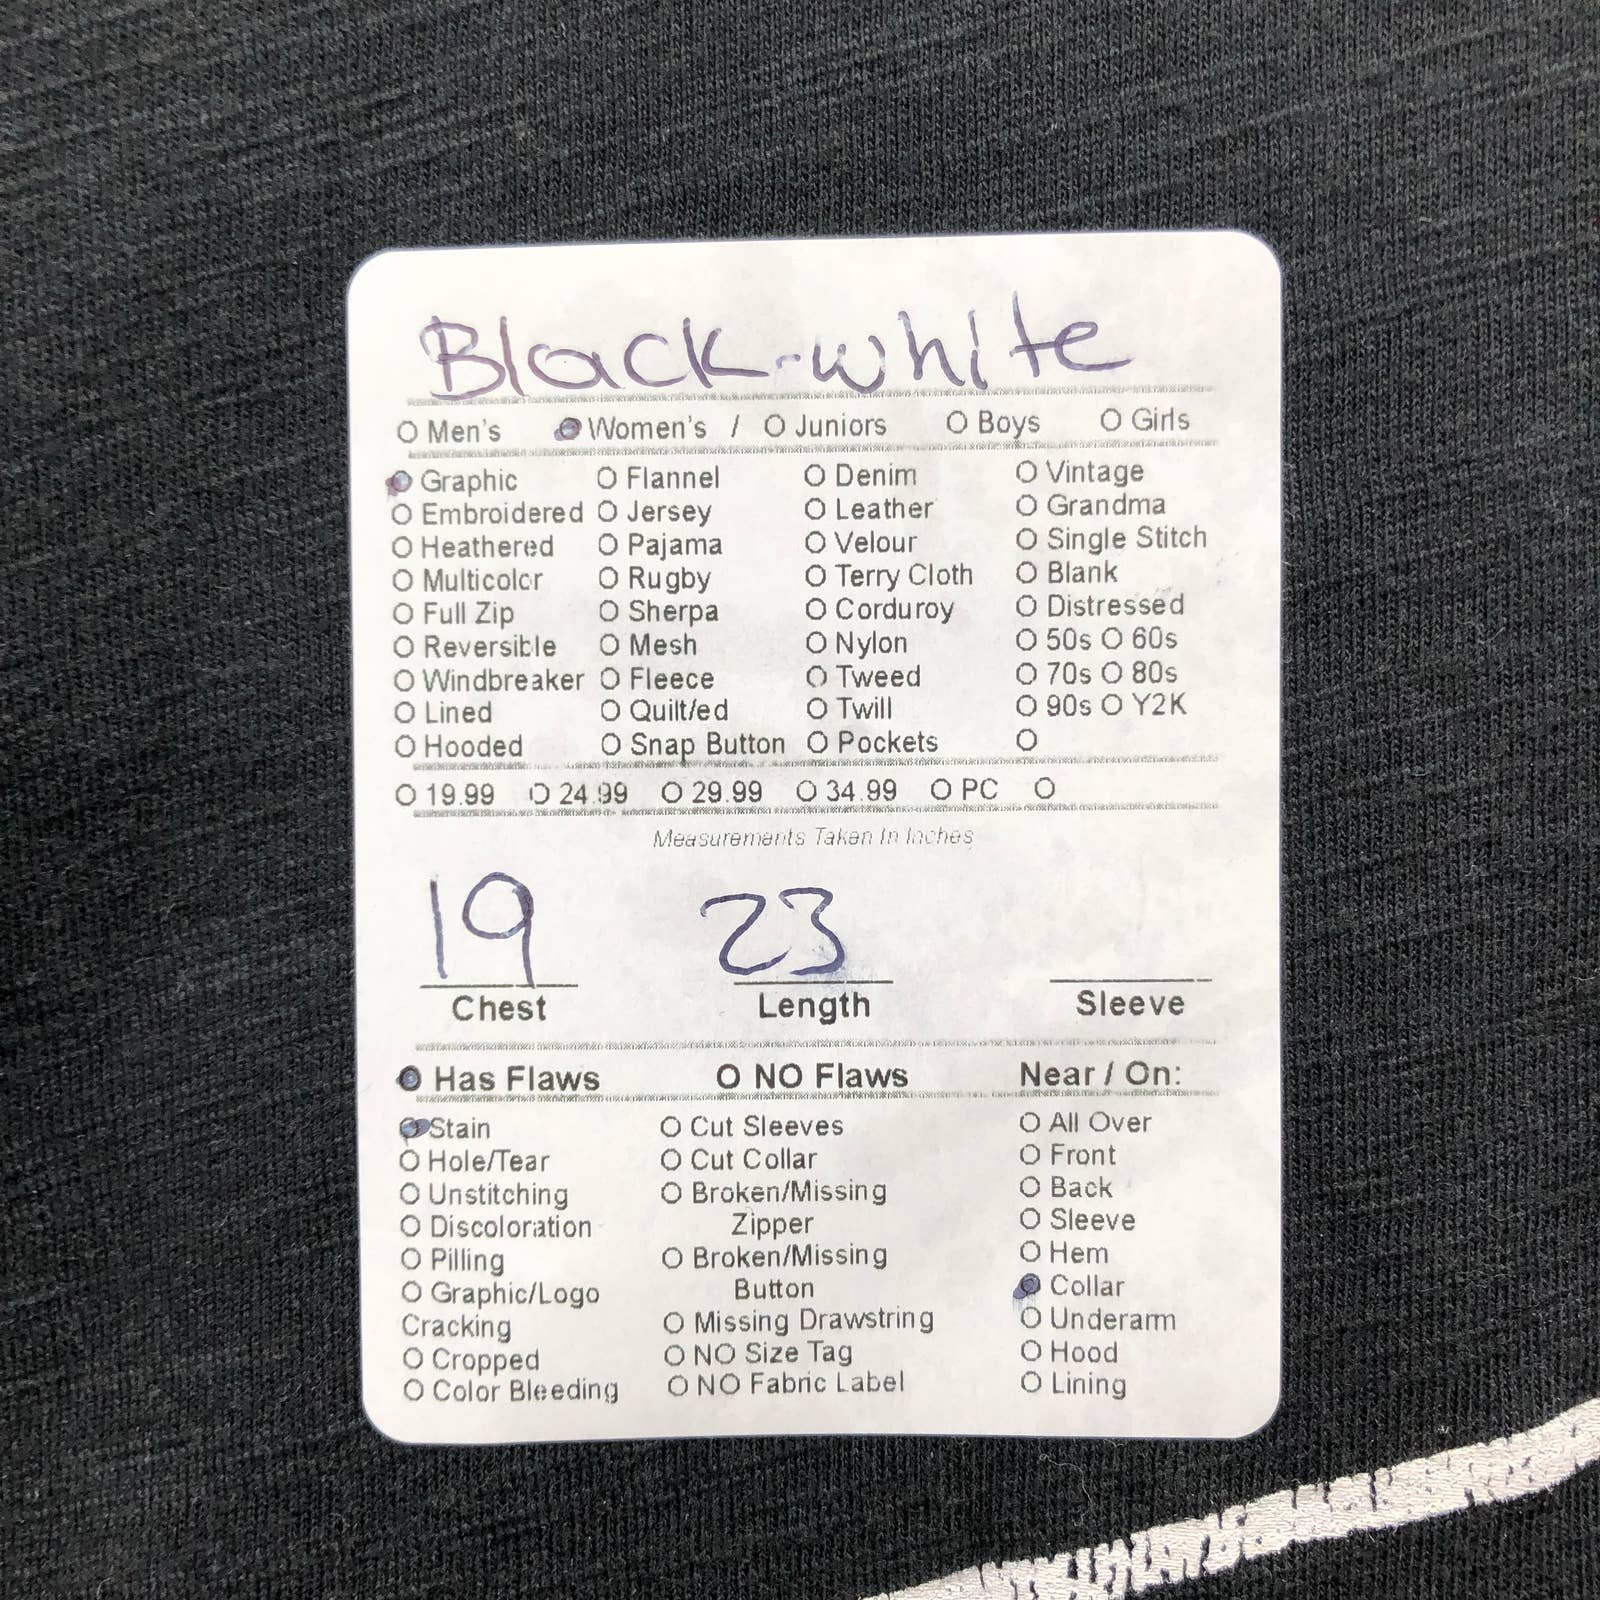 Buy Pink Floyd T-Shirt Women´s Medium M Short Sleeve Ringer Graphic Black White j4JJEmpJs Low Price